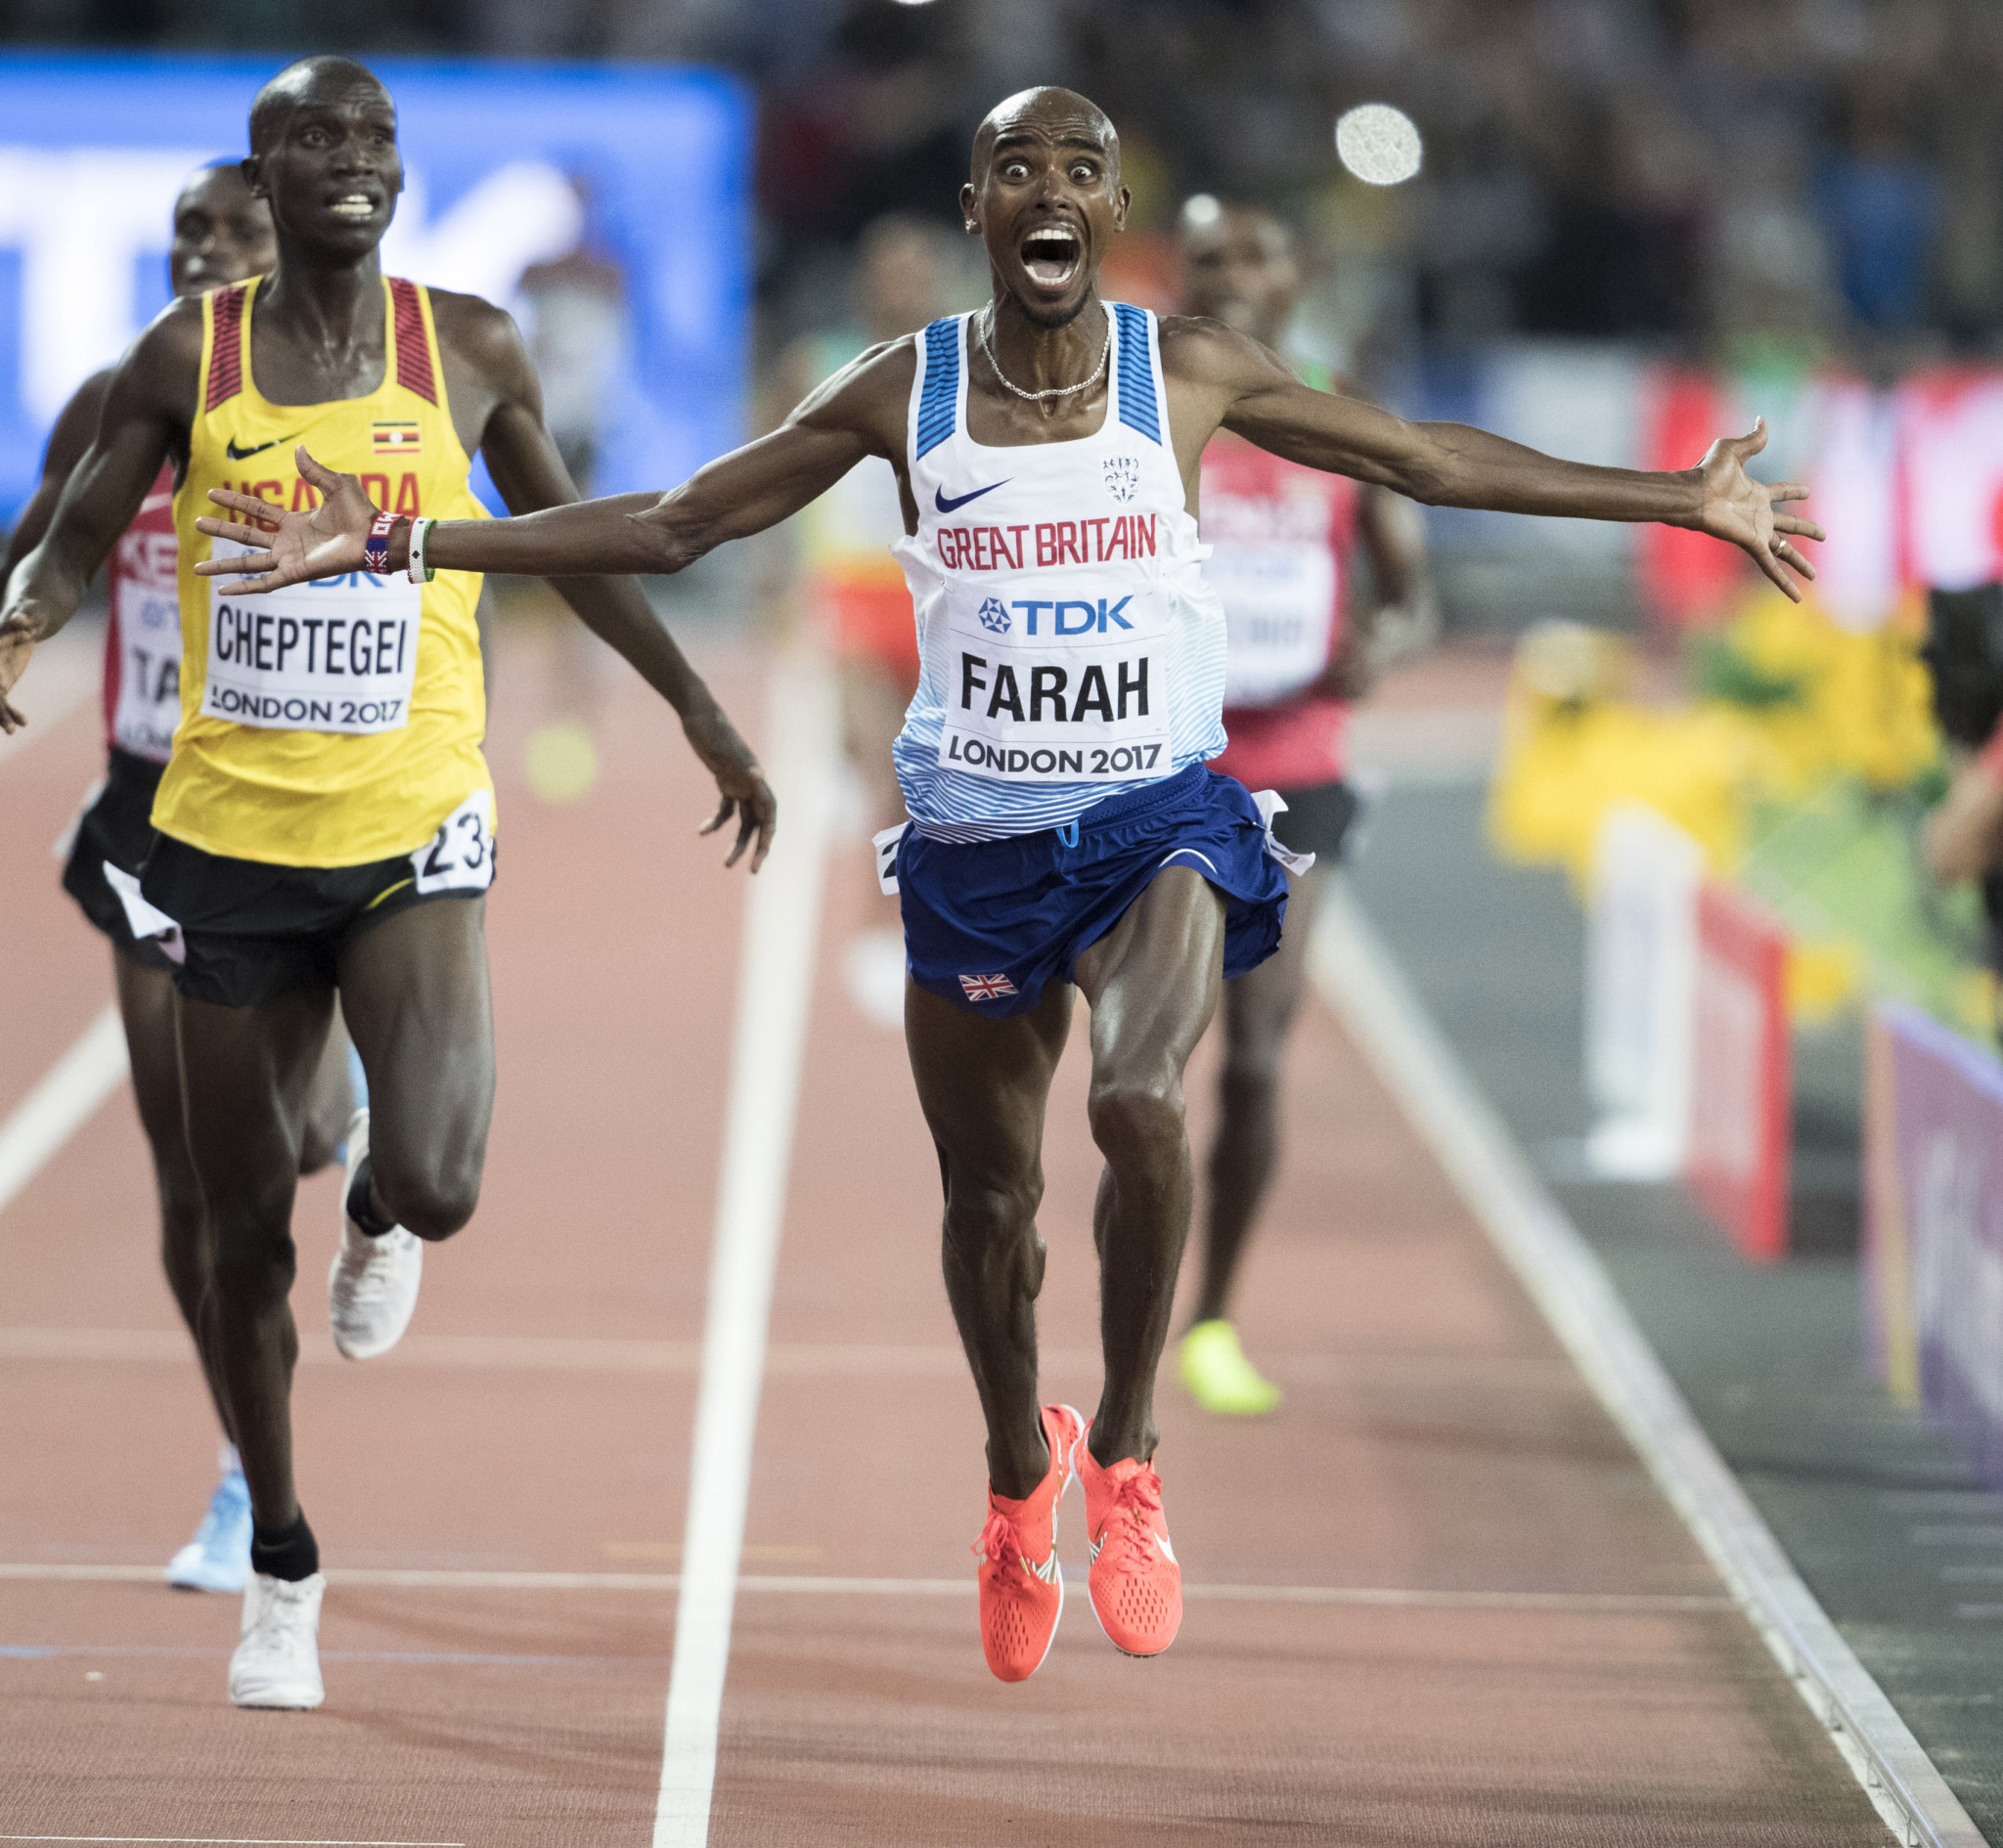 The IAAF World Athletics Championships Day 1 The London Stadium Mo Farah win his third consecutive gold in the 10,000m at the World Athletics Championships at London Stadium.